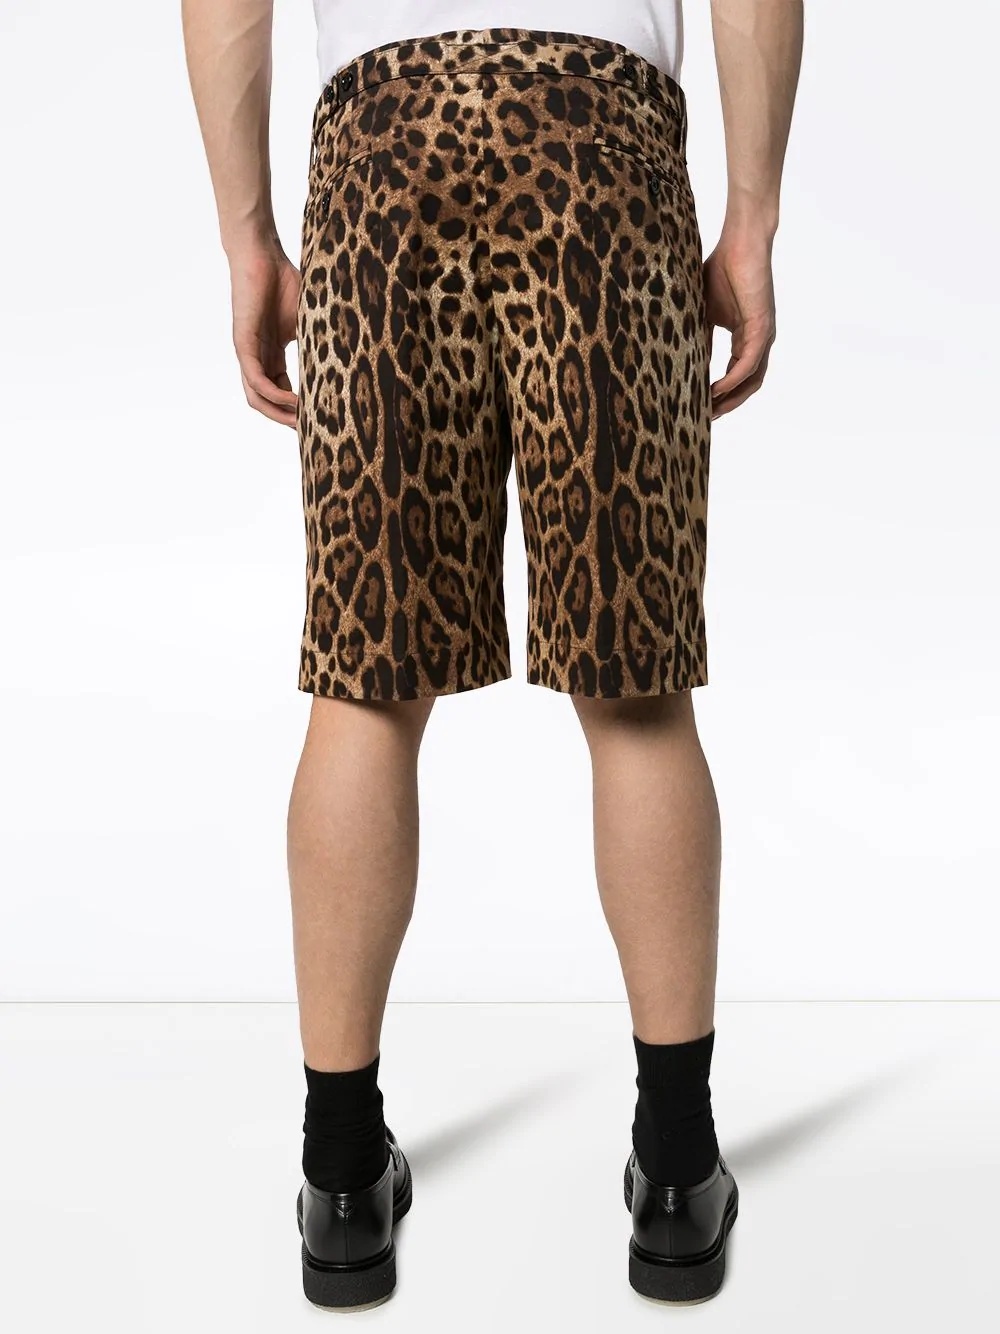 leopard-print bermuda shorts - 4